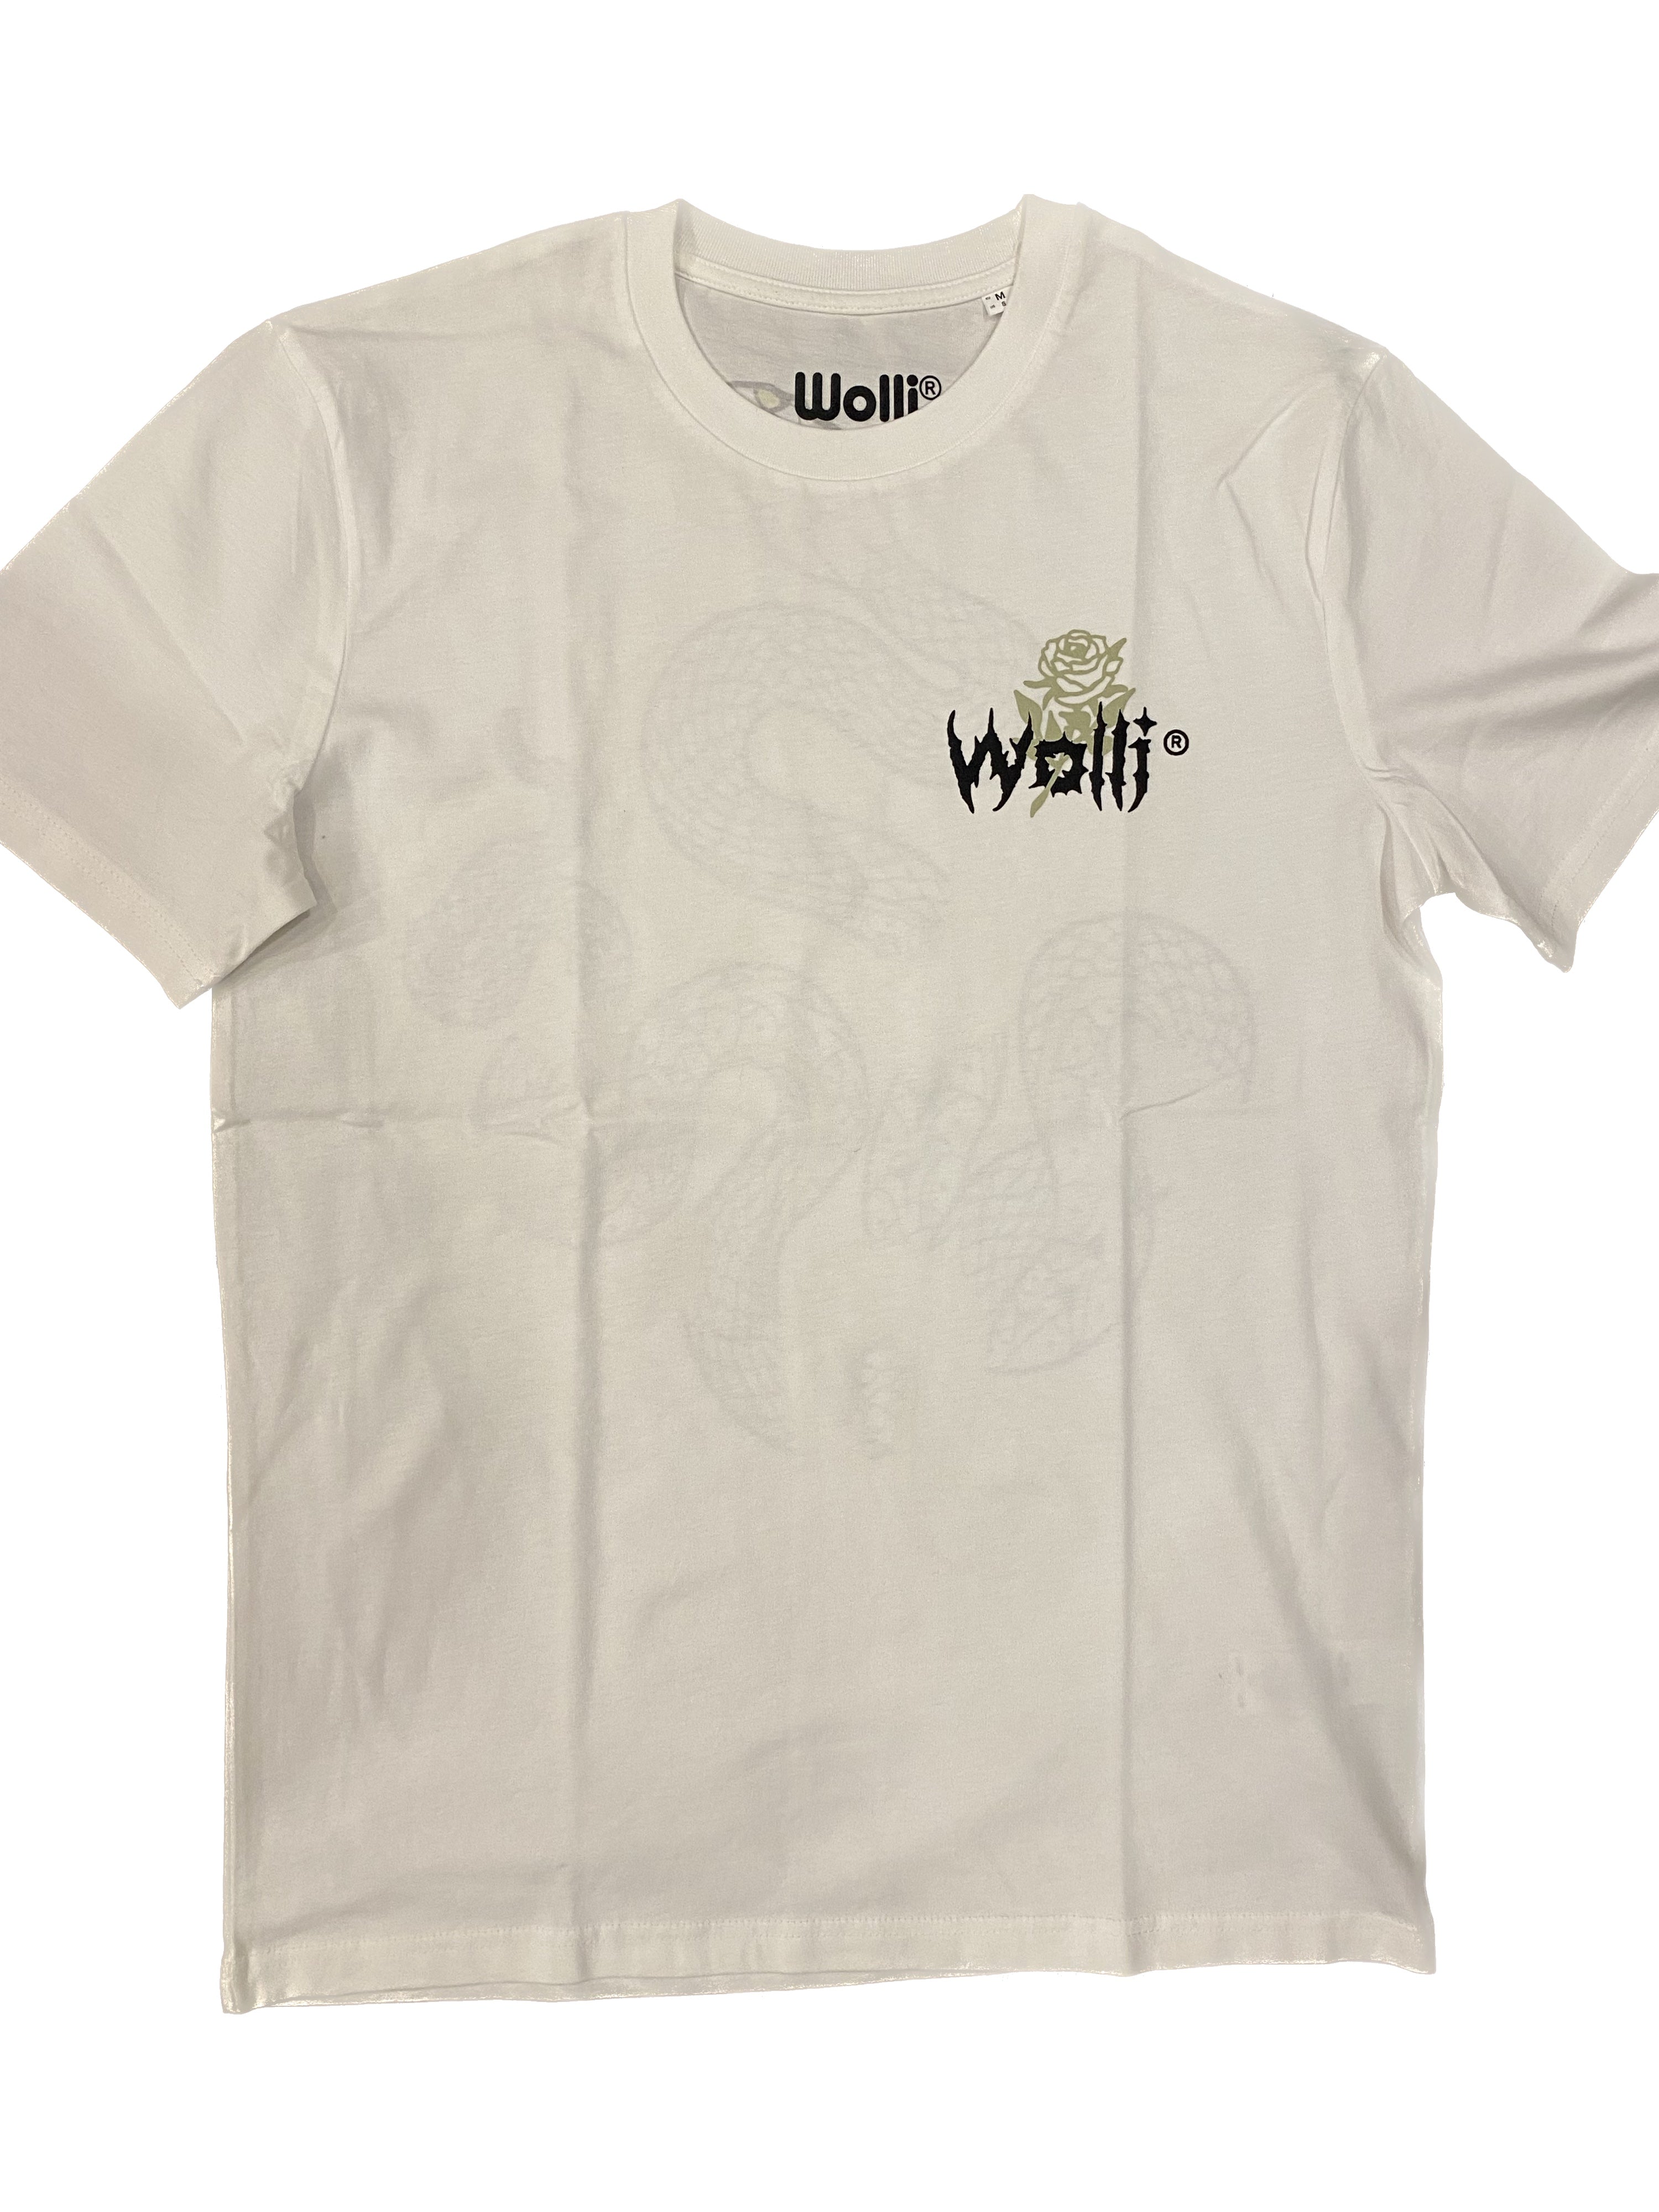 T-shirt 2SERPENTI BIANCO schiena - Wolli®